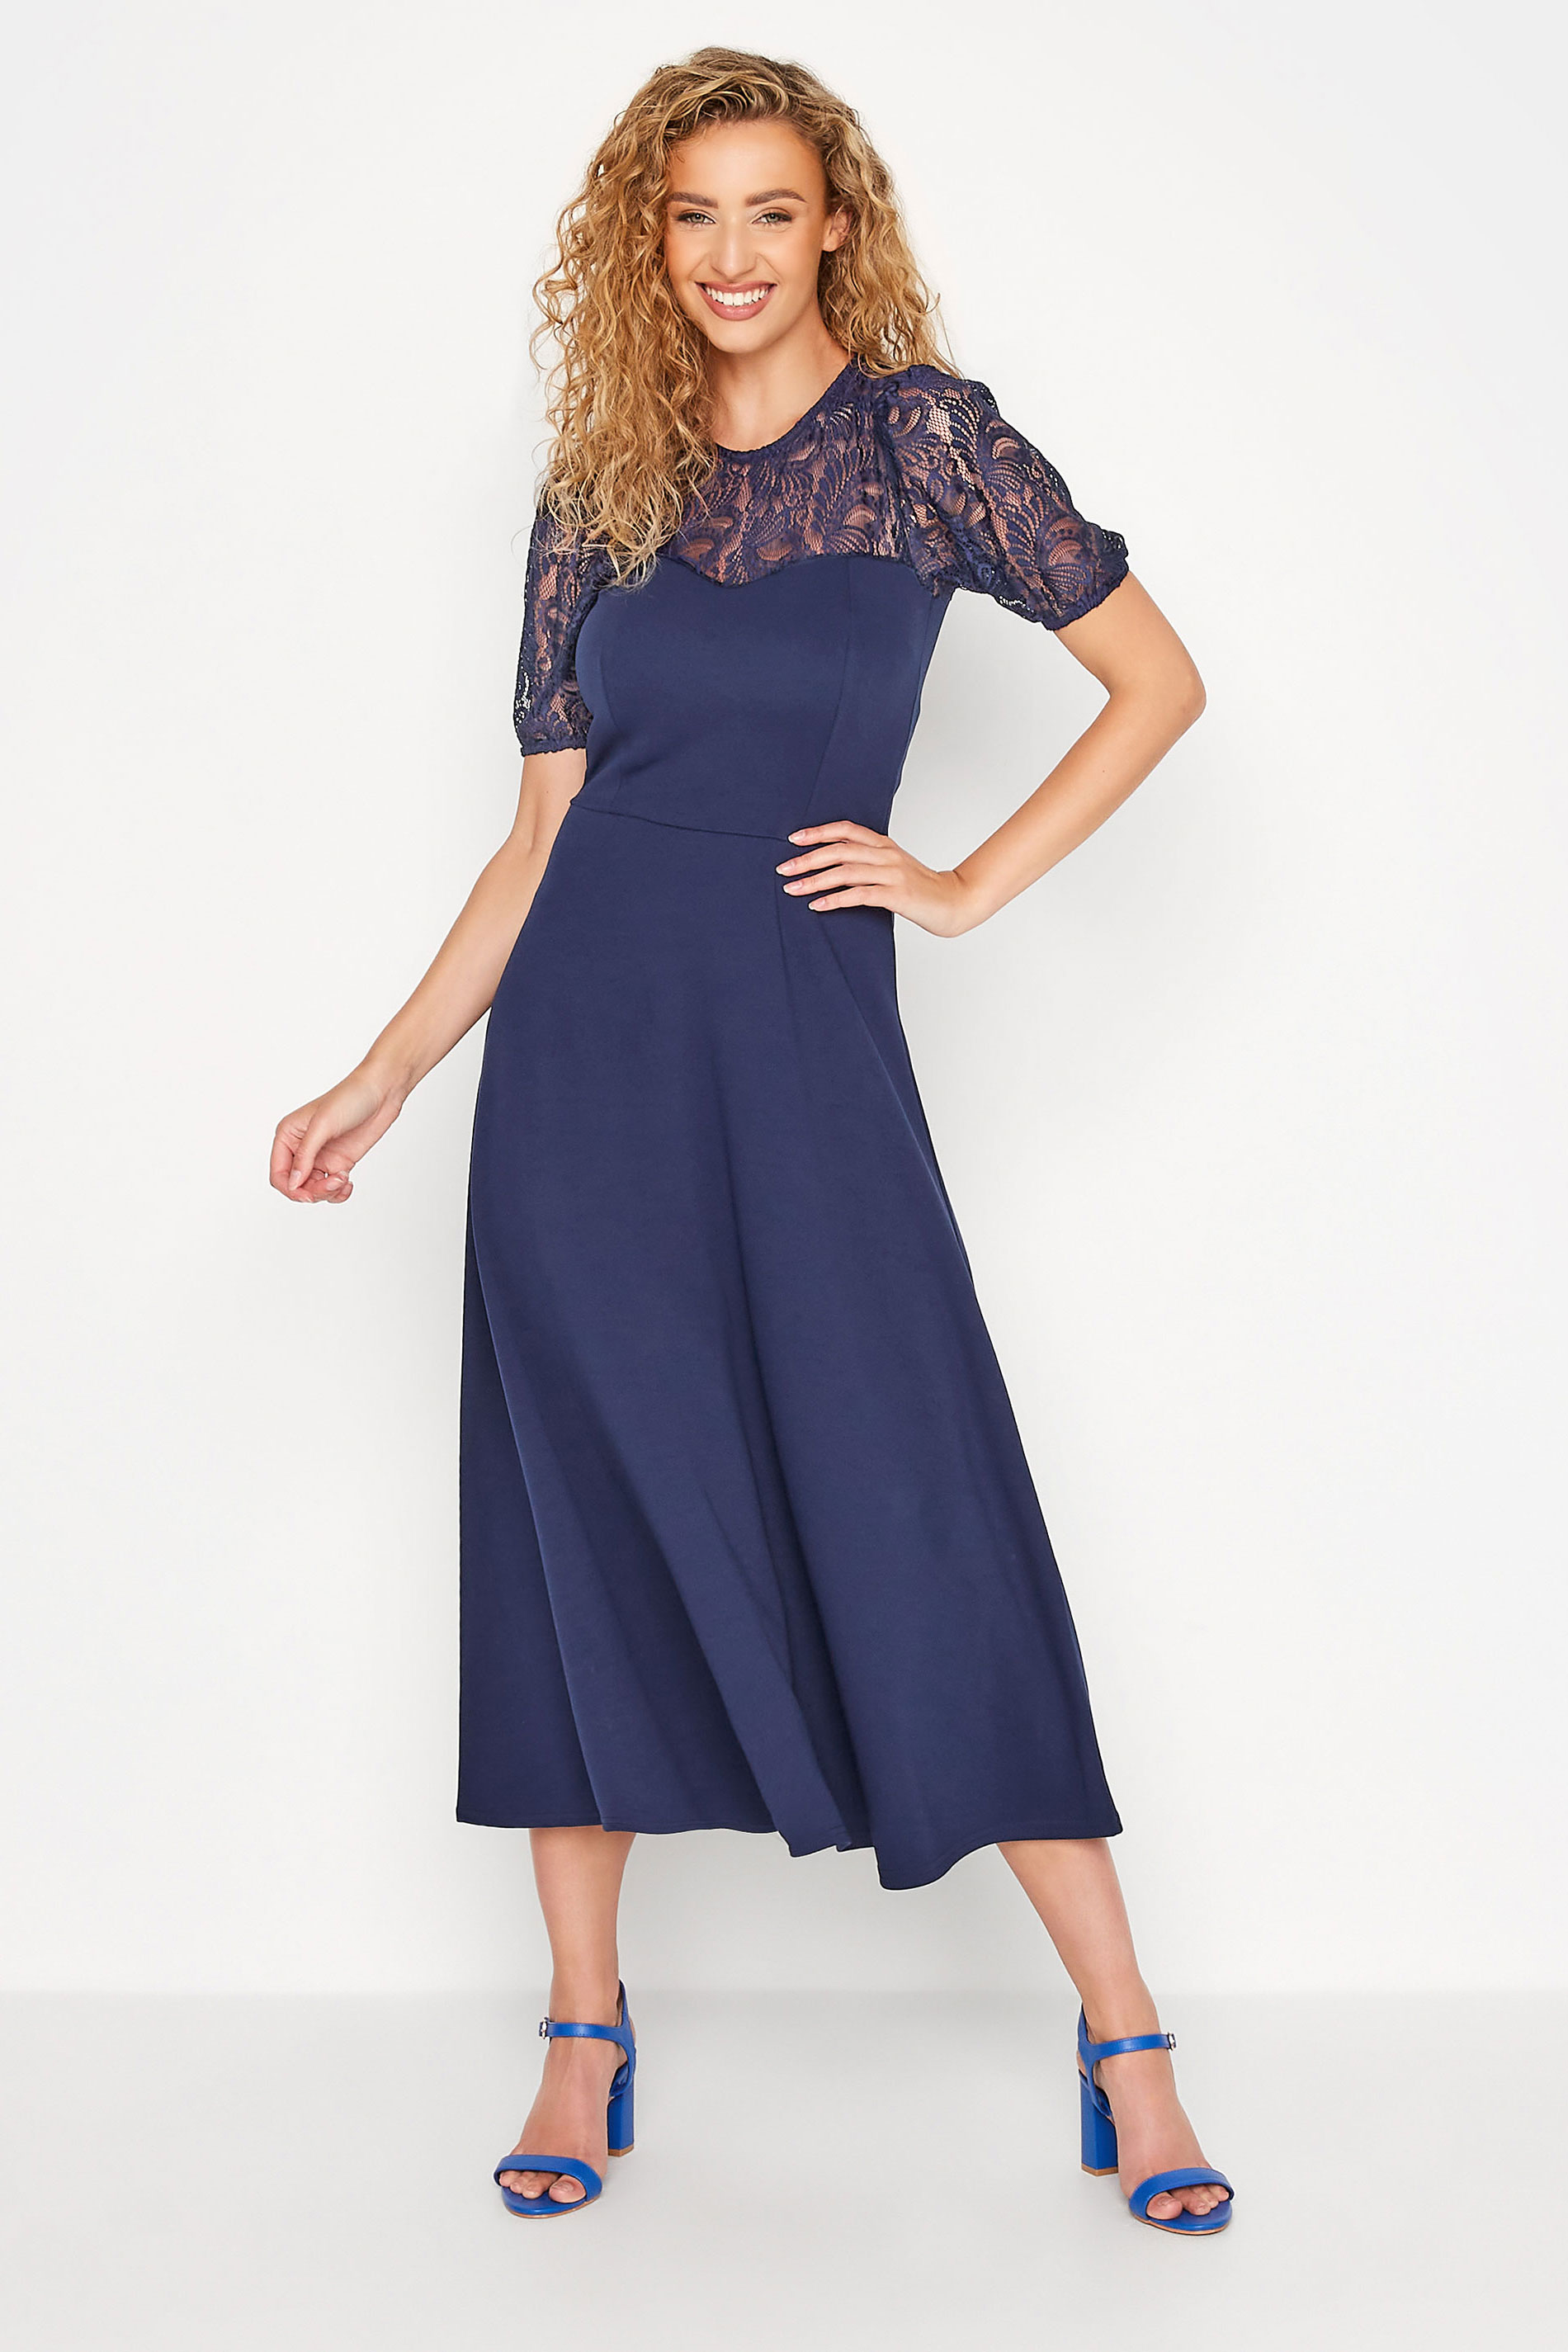 Tall Women's LTS Navy Blue Lace Midi Dress | Long Tall Sally